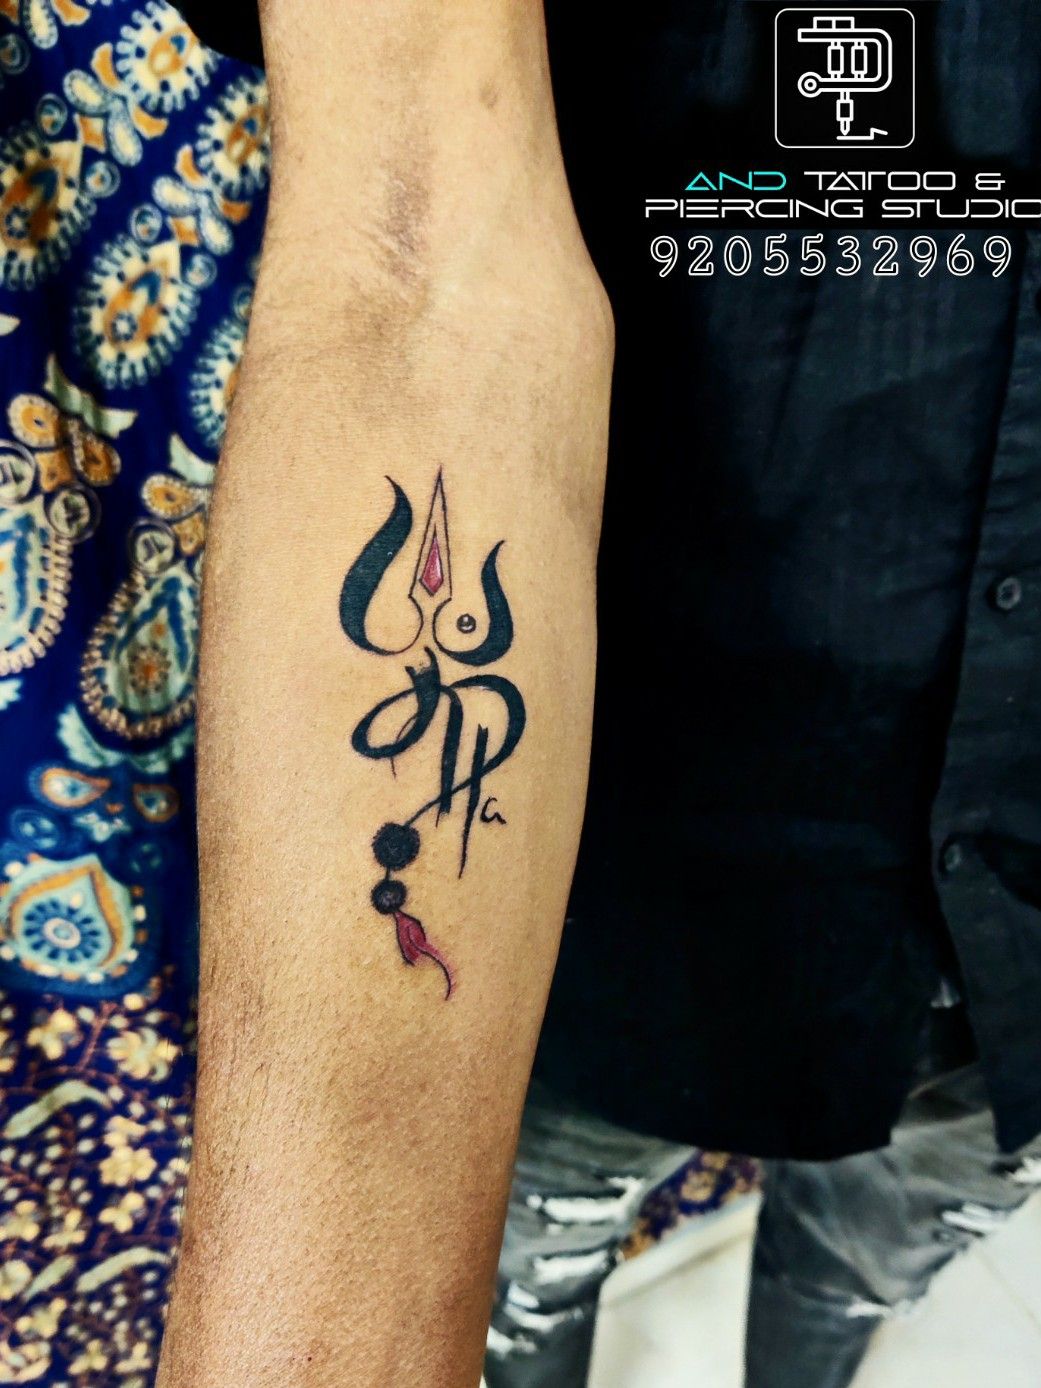 Festive cheer Navratri Durga Puja tattoos are trending despite pandemic  say tattoo artists  Lifestyle NewsThe Indian Express